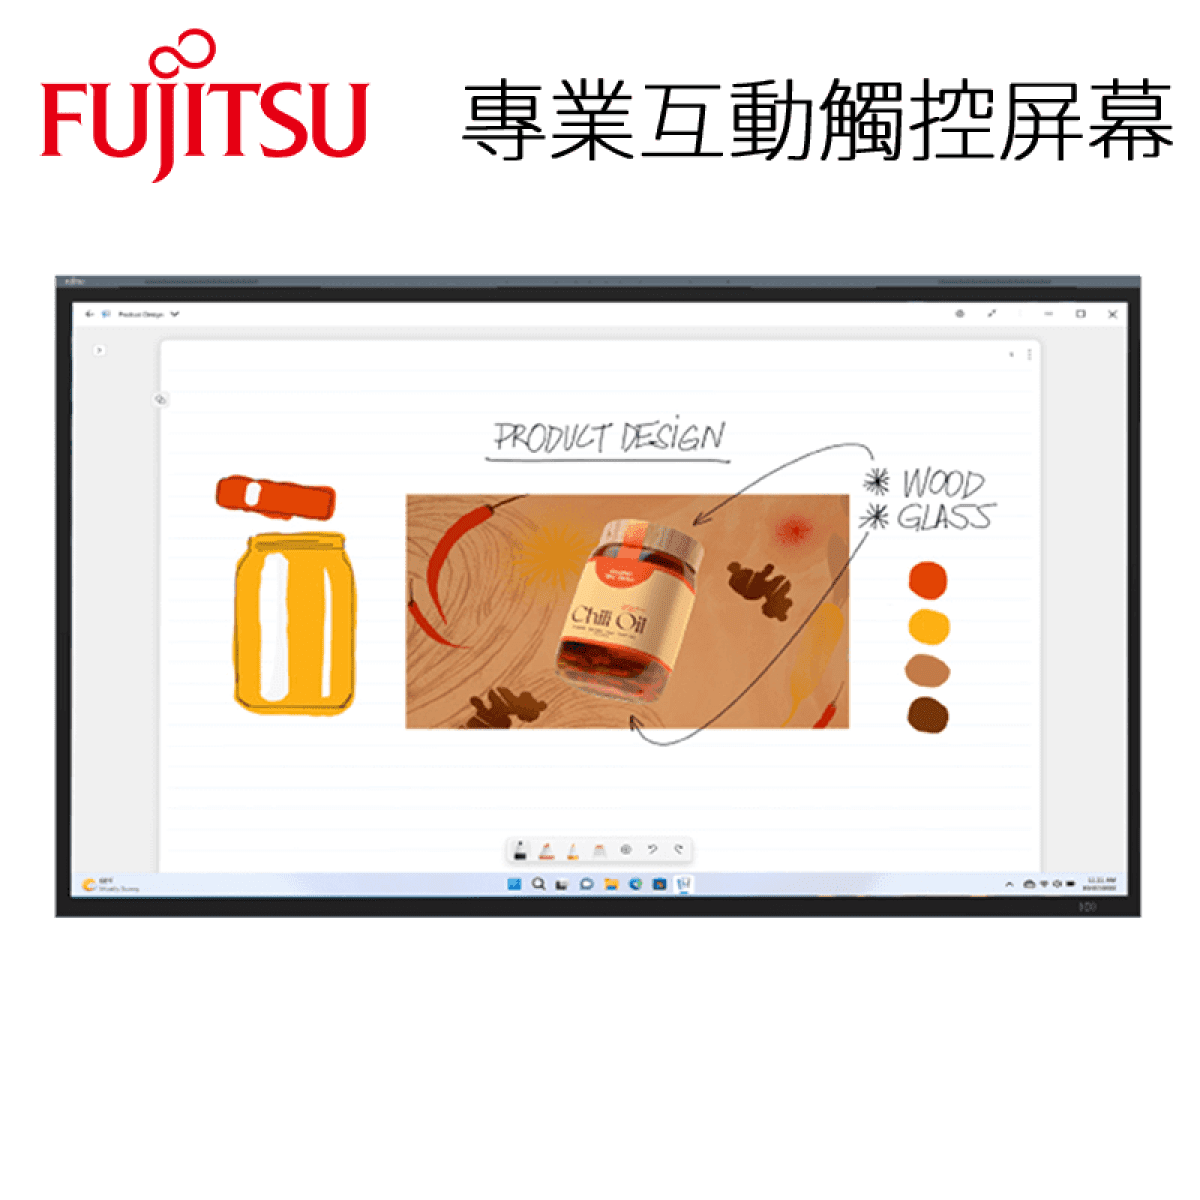 FUJITSU IW862 Ultra 互動觸控屏幕